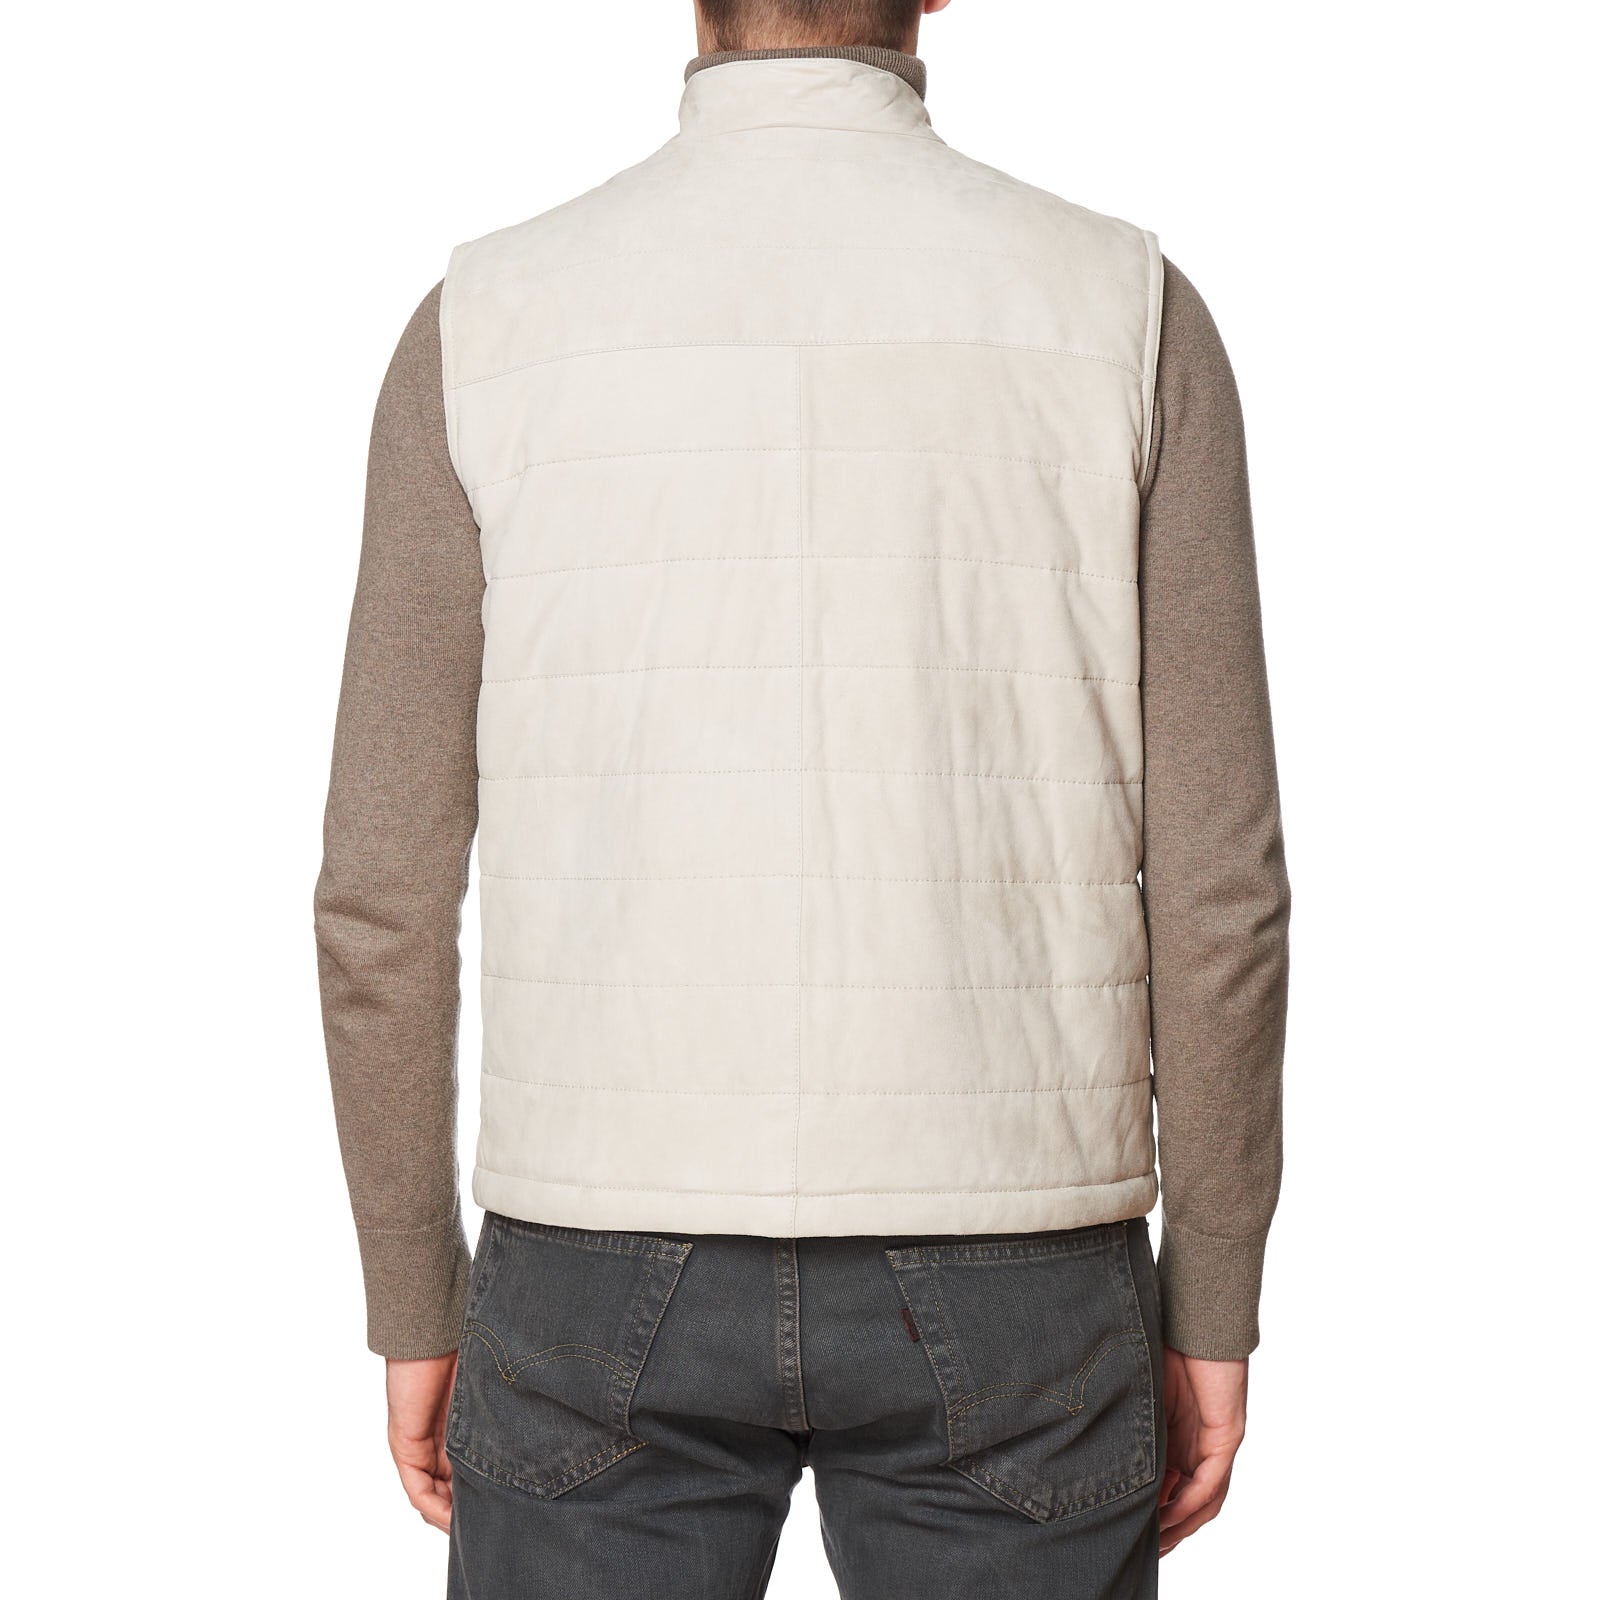 KITON KIRED "Est" Light Gray Lambskin Leather Vest 50 M KIRED